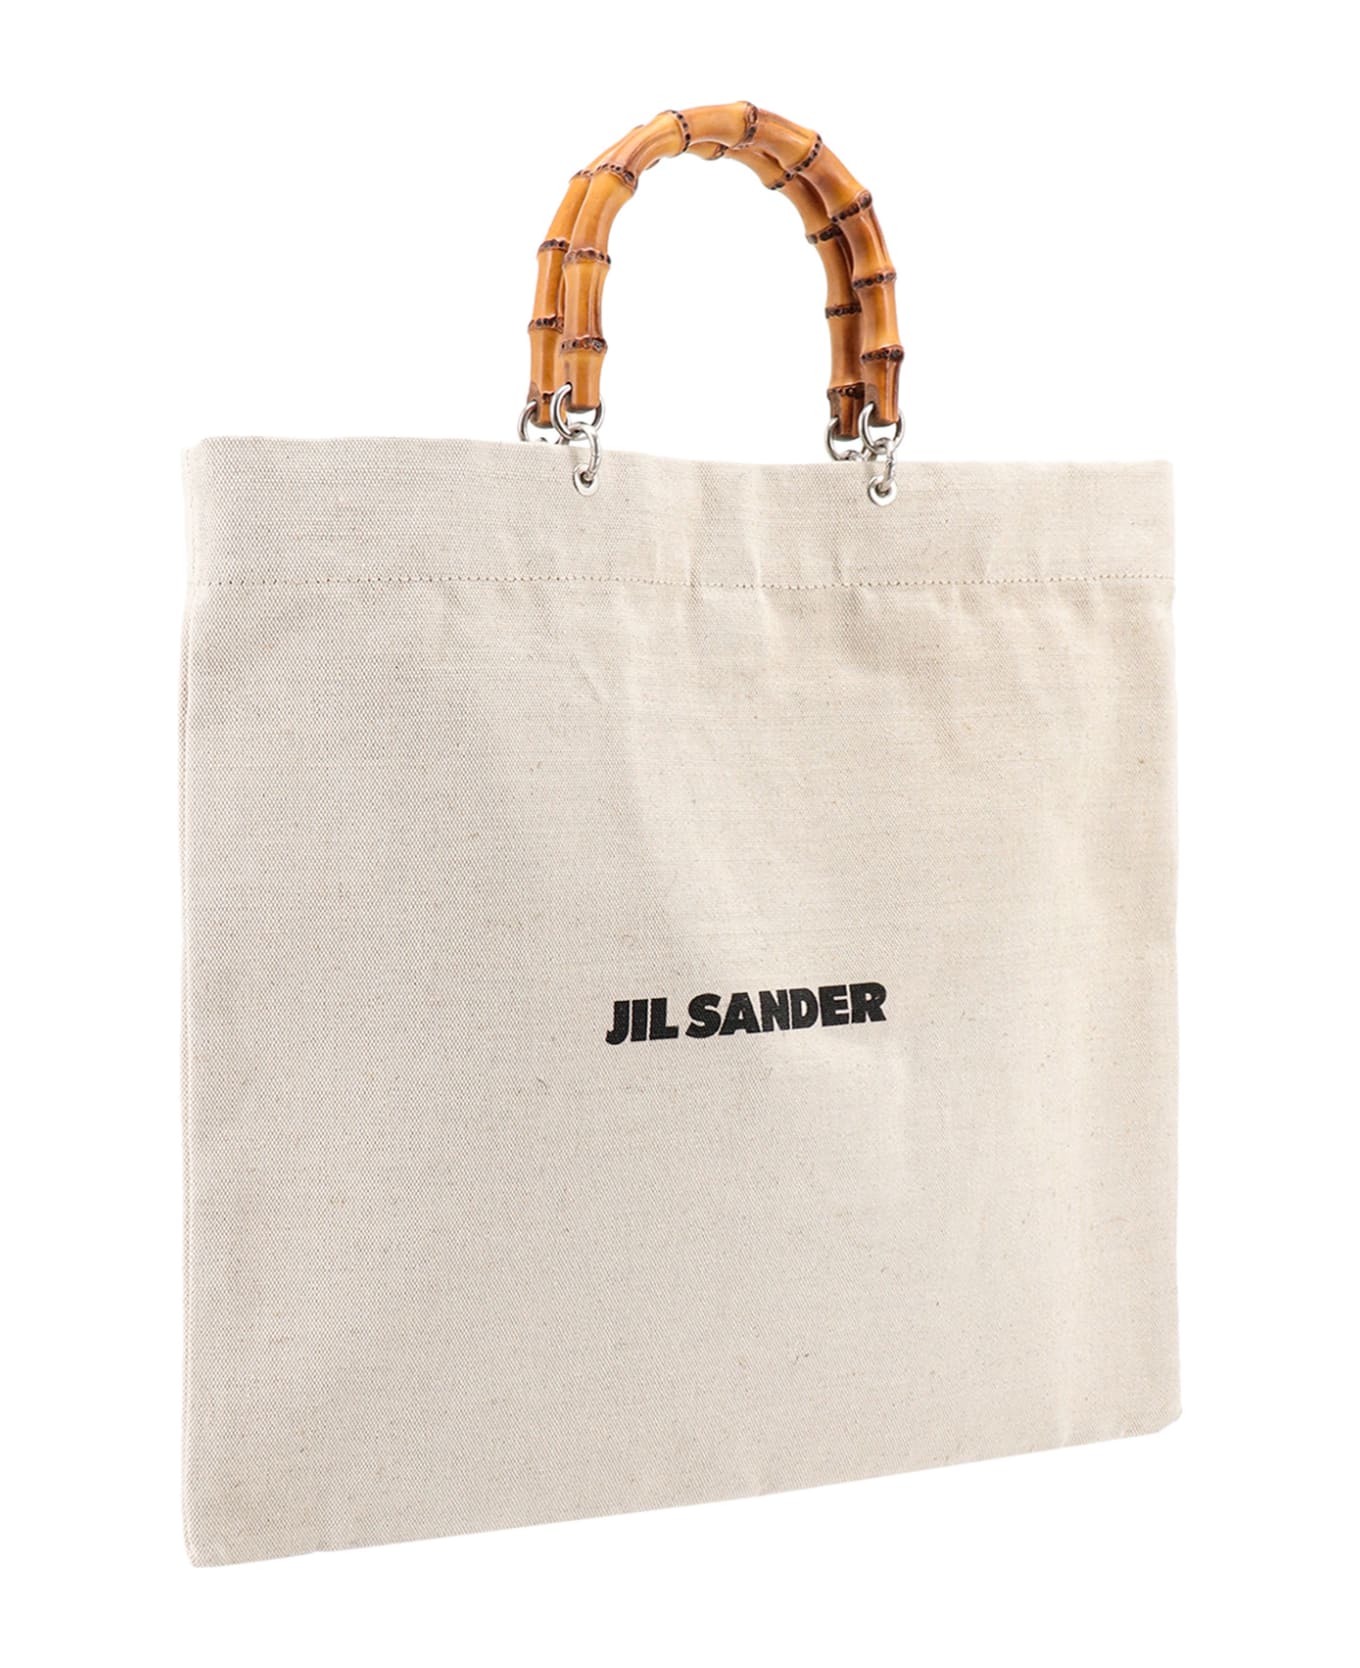 Jil Sander Sand Canvas Handbag - Beige